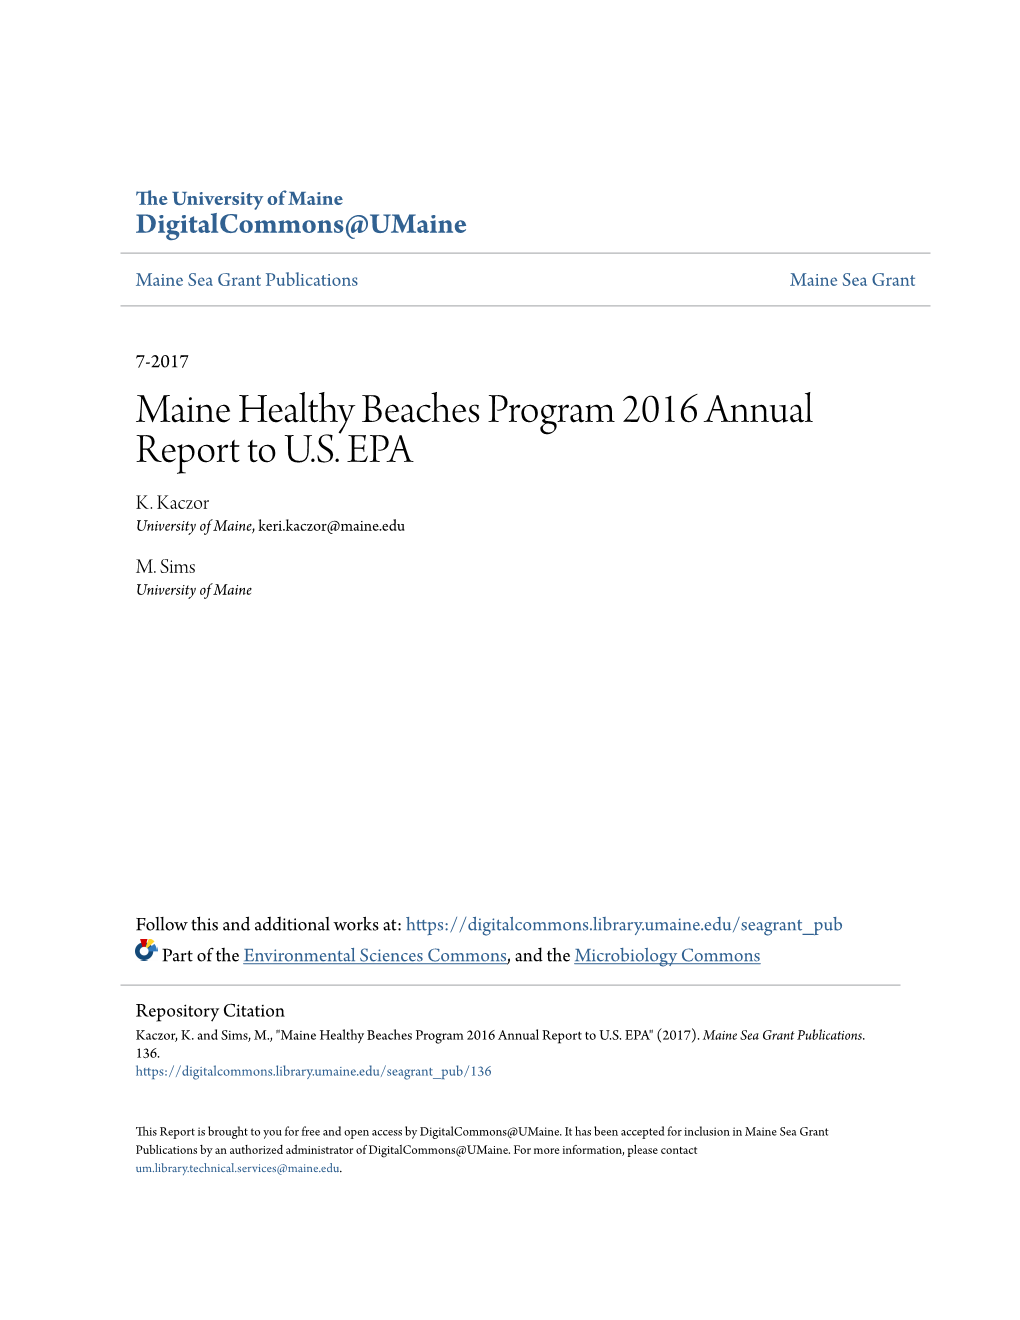 Maine Healthy Beaches Program 2016 Annual Report to U.S. EPA K